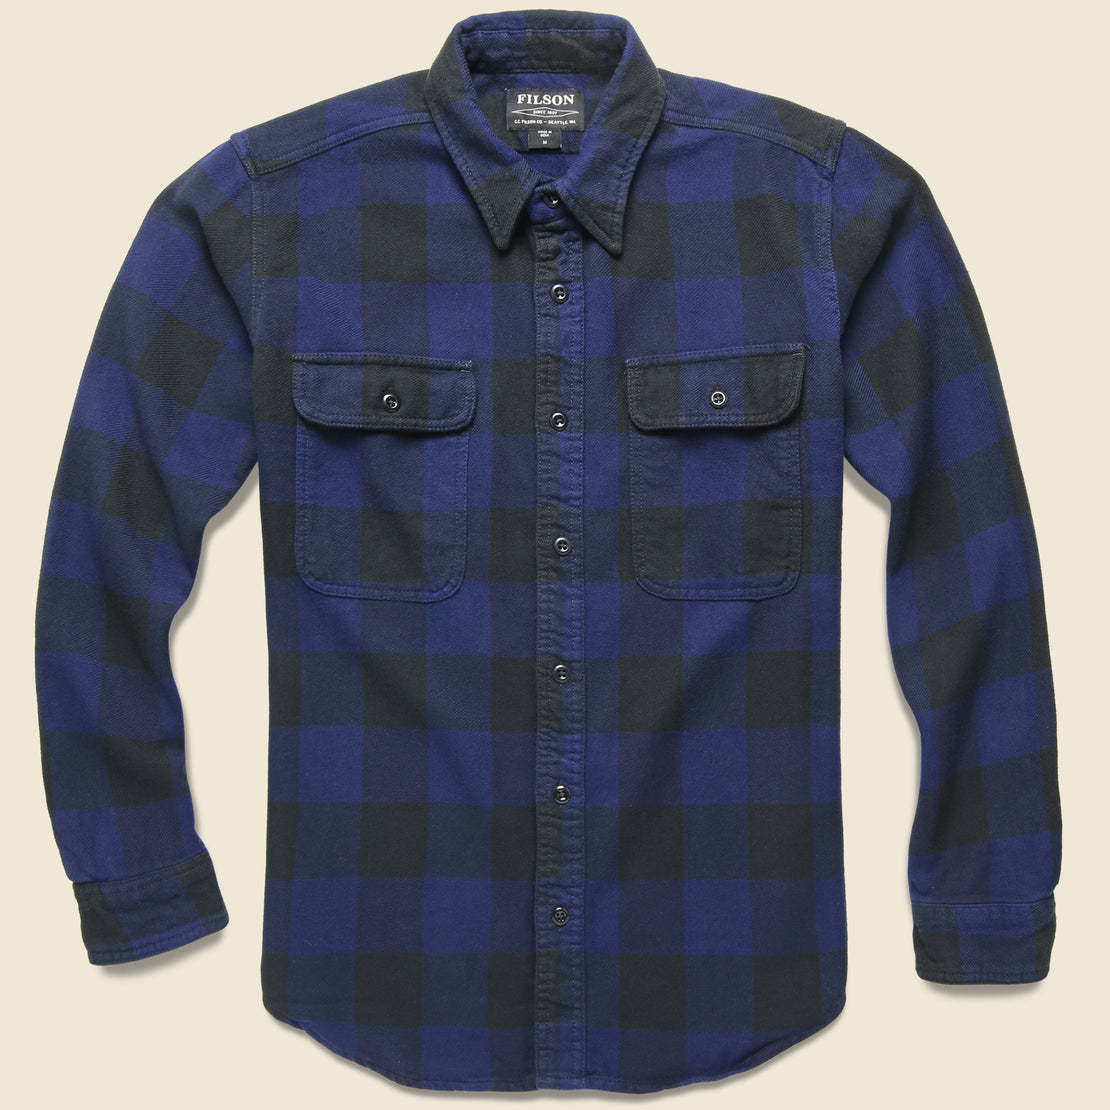 Filson Vintage Flannel Workshirt - Dark Blue/ Charcoal